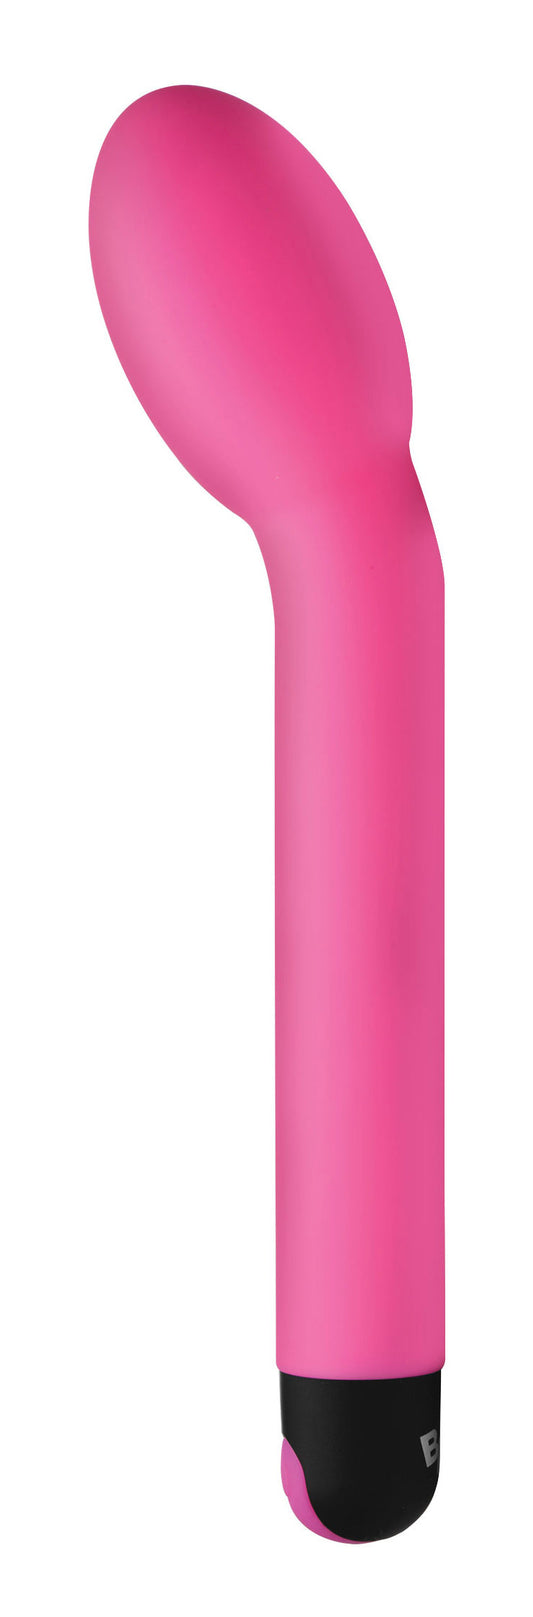 10x G-Spot Vibrator - Pink BNG-AG759-PNK